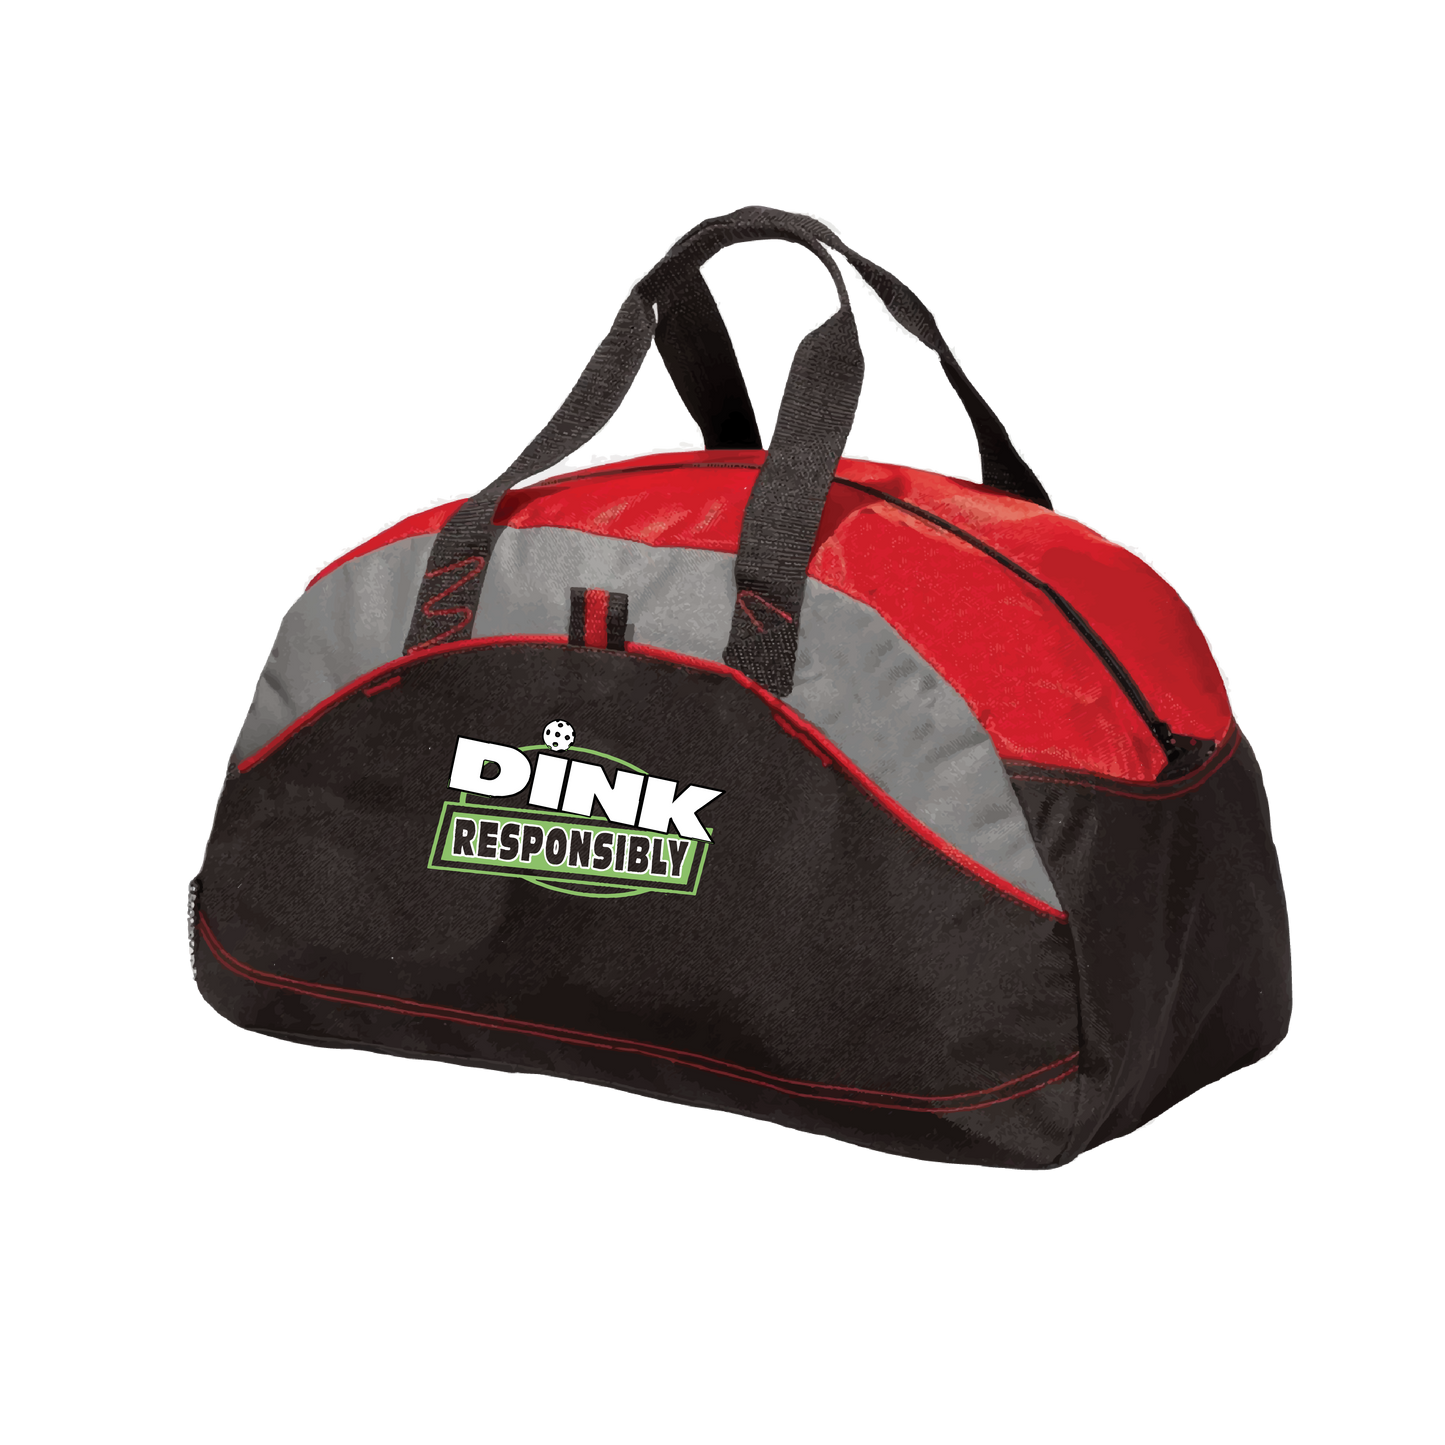 Dink Responsibly | Pickleball Sports Duffel | Medium Size Court Bag